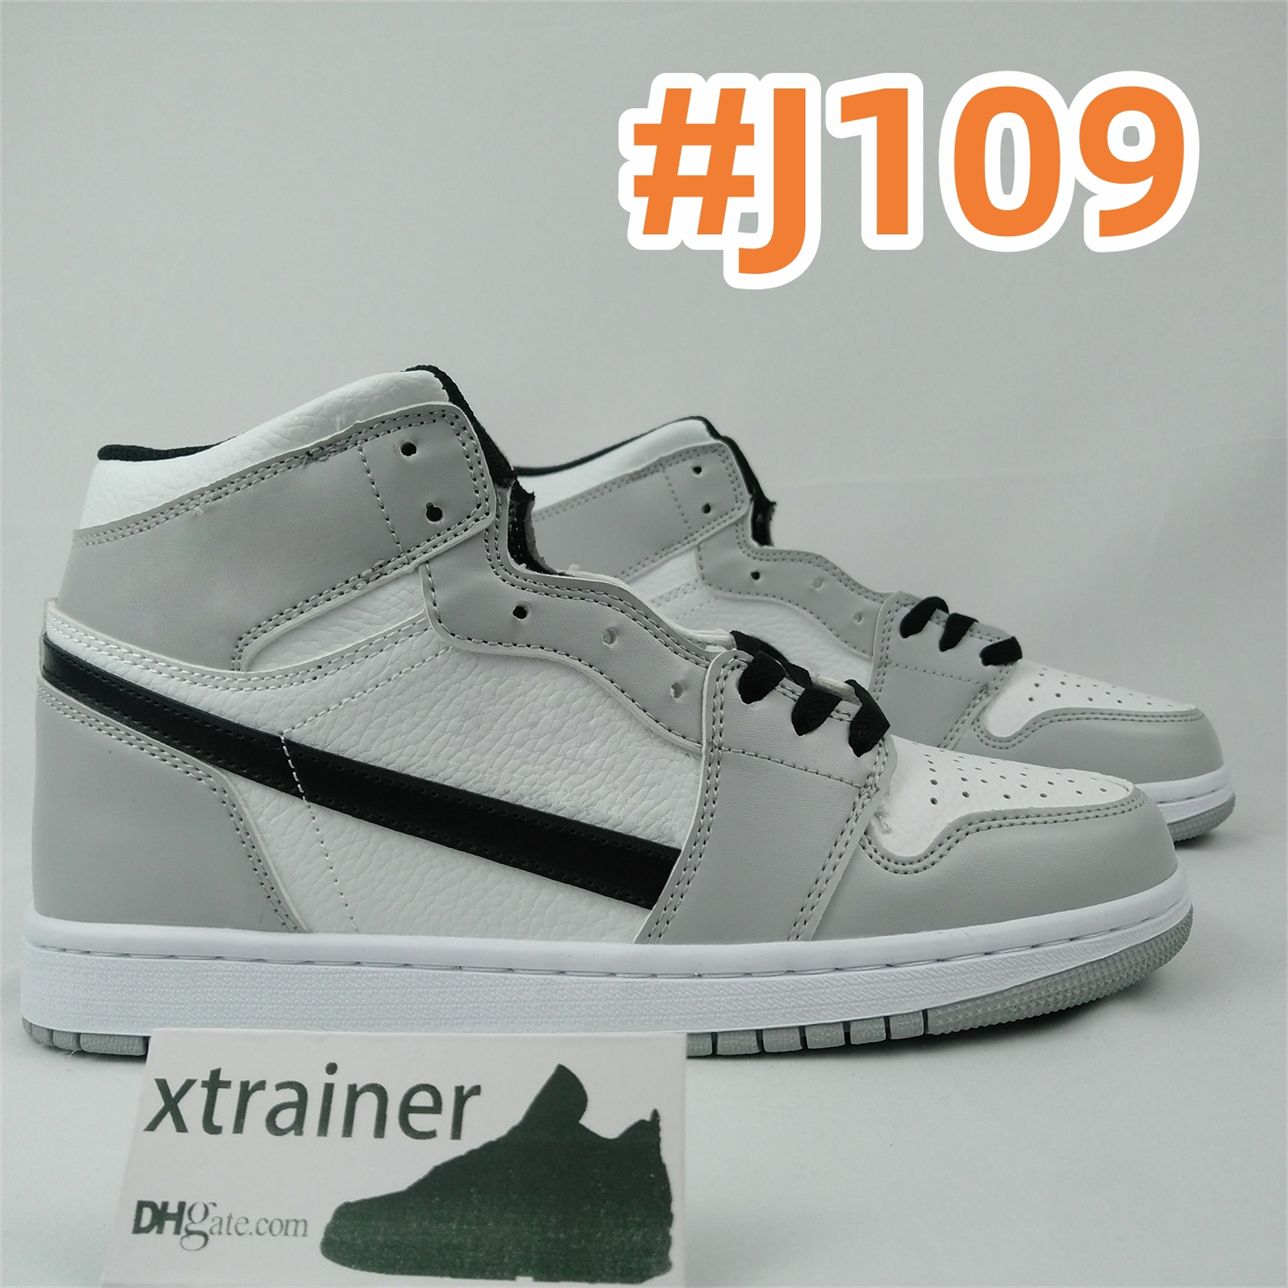 # J109